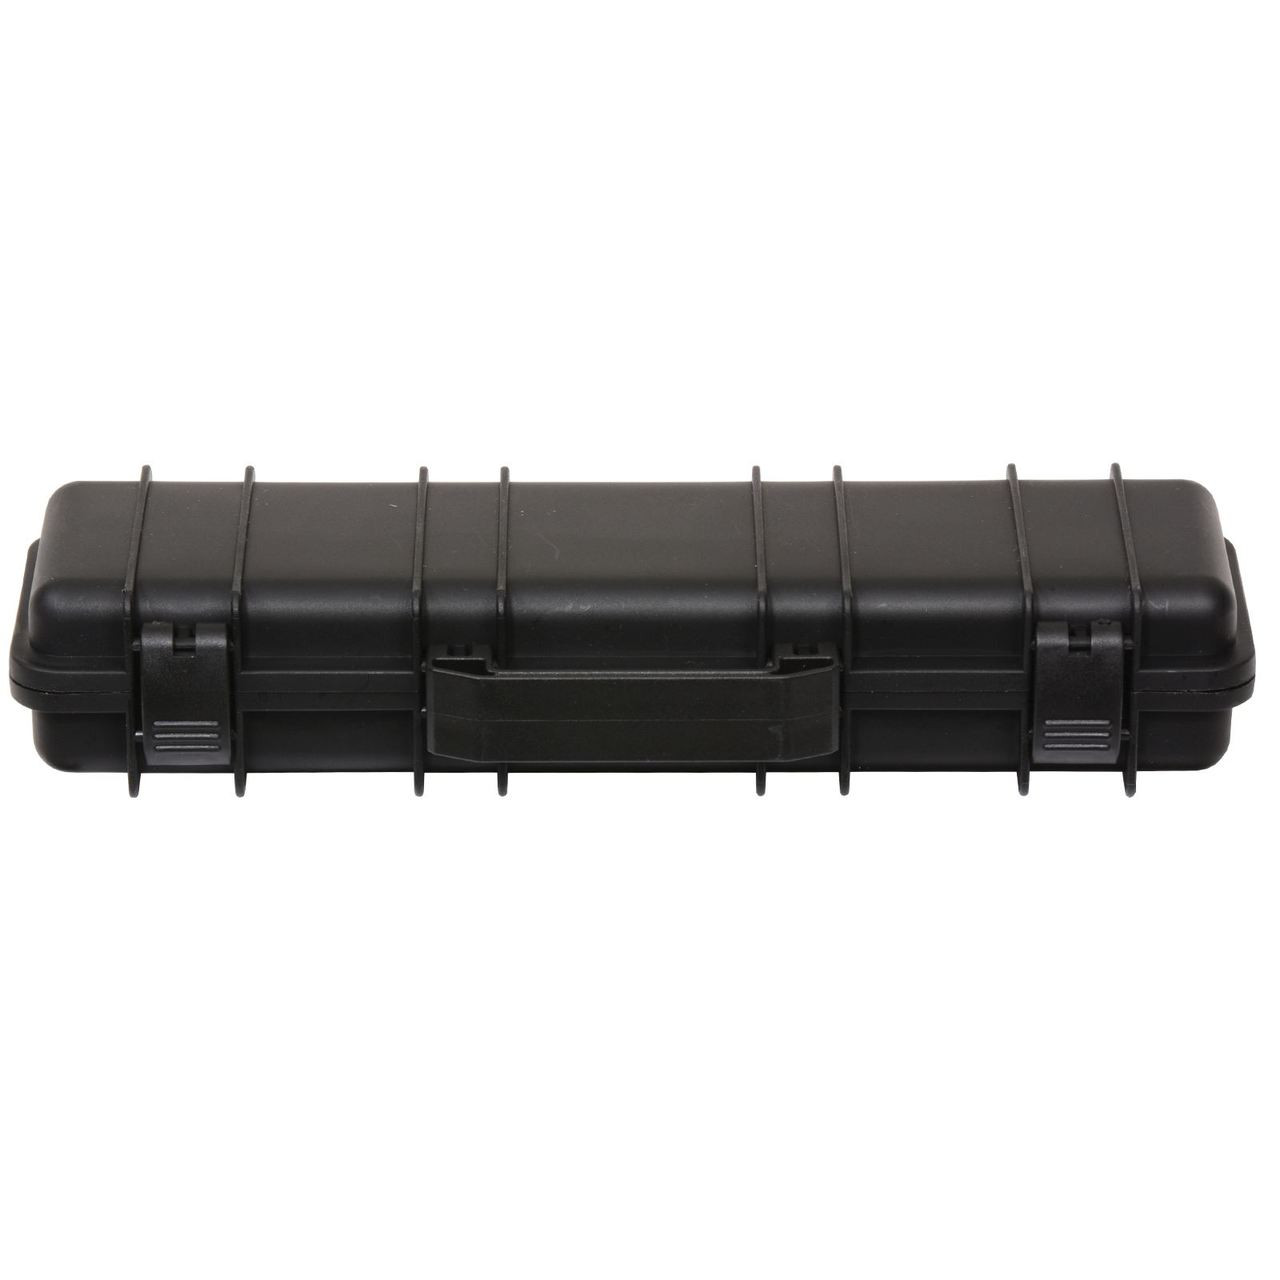 PKBOXGUN2B Tactical Rifle Case Pen Box in Black